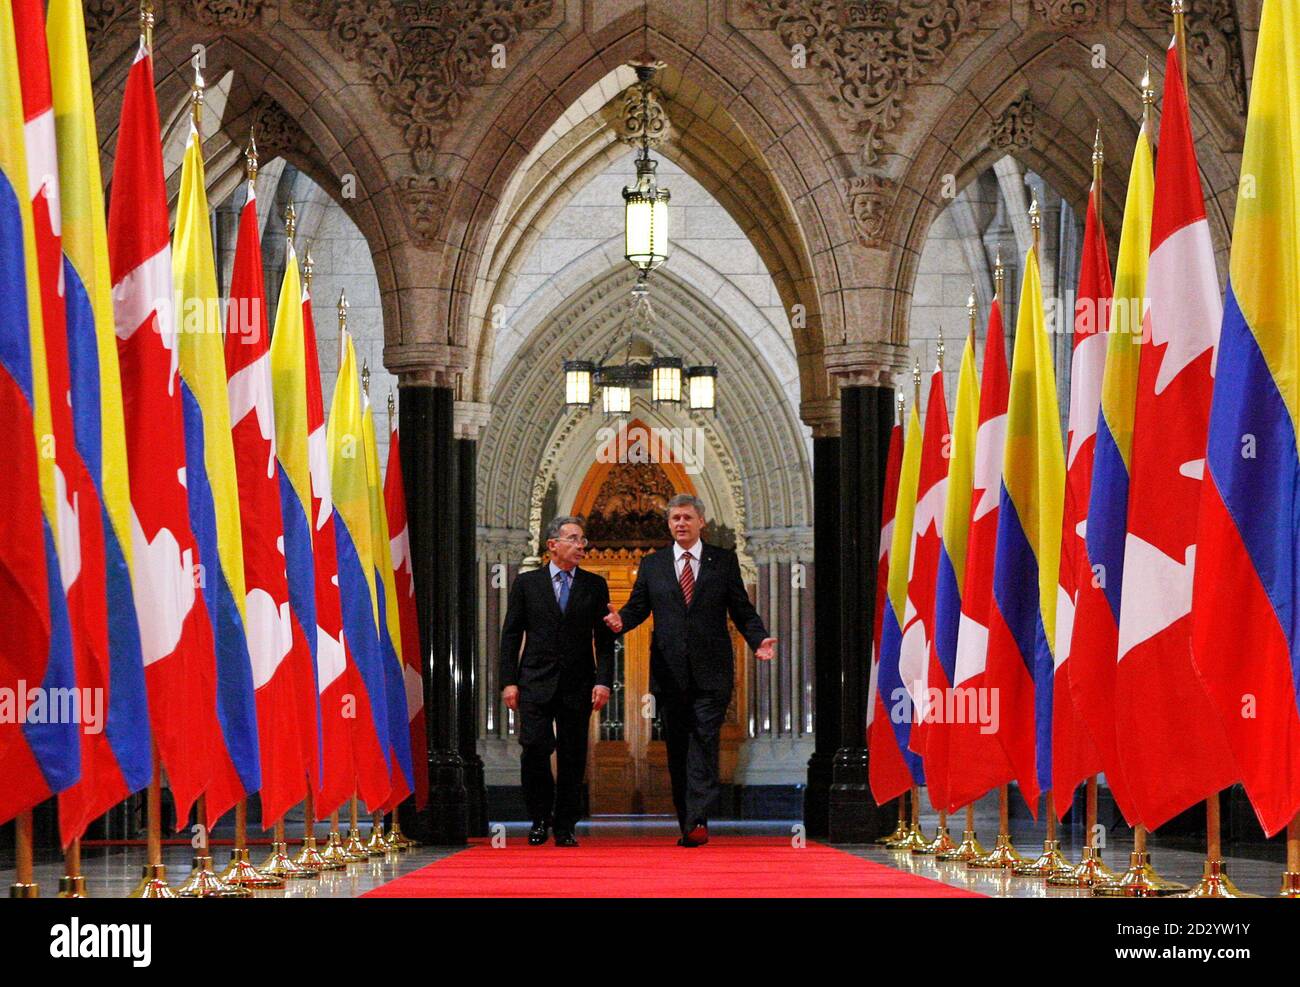 Canada's Prime Minister Stephen Harper (R) and Colombia's President Alvaro Uribe walk down the Hall of Honour on Parliament Hill in Ottawa June 10, 2009.       REUTERS/Chris Wattie       (CANADA POLITICS) Stock Photo